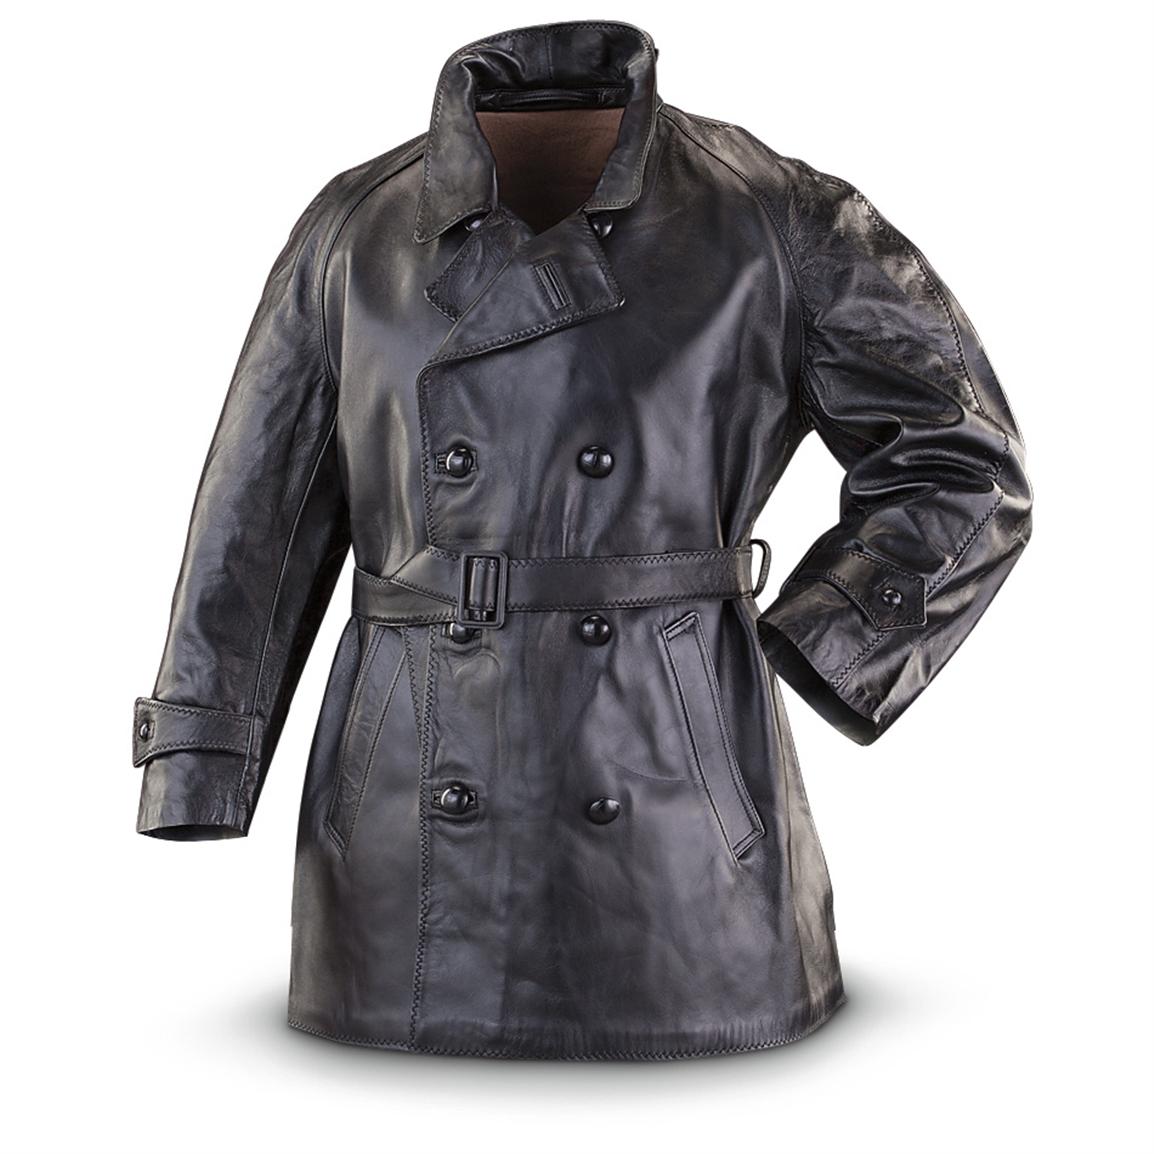 Police Leather Jacket 23